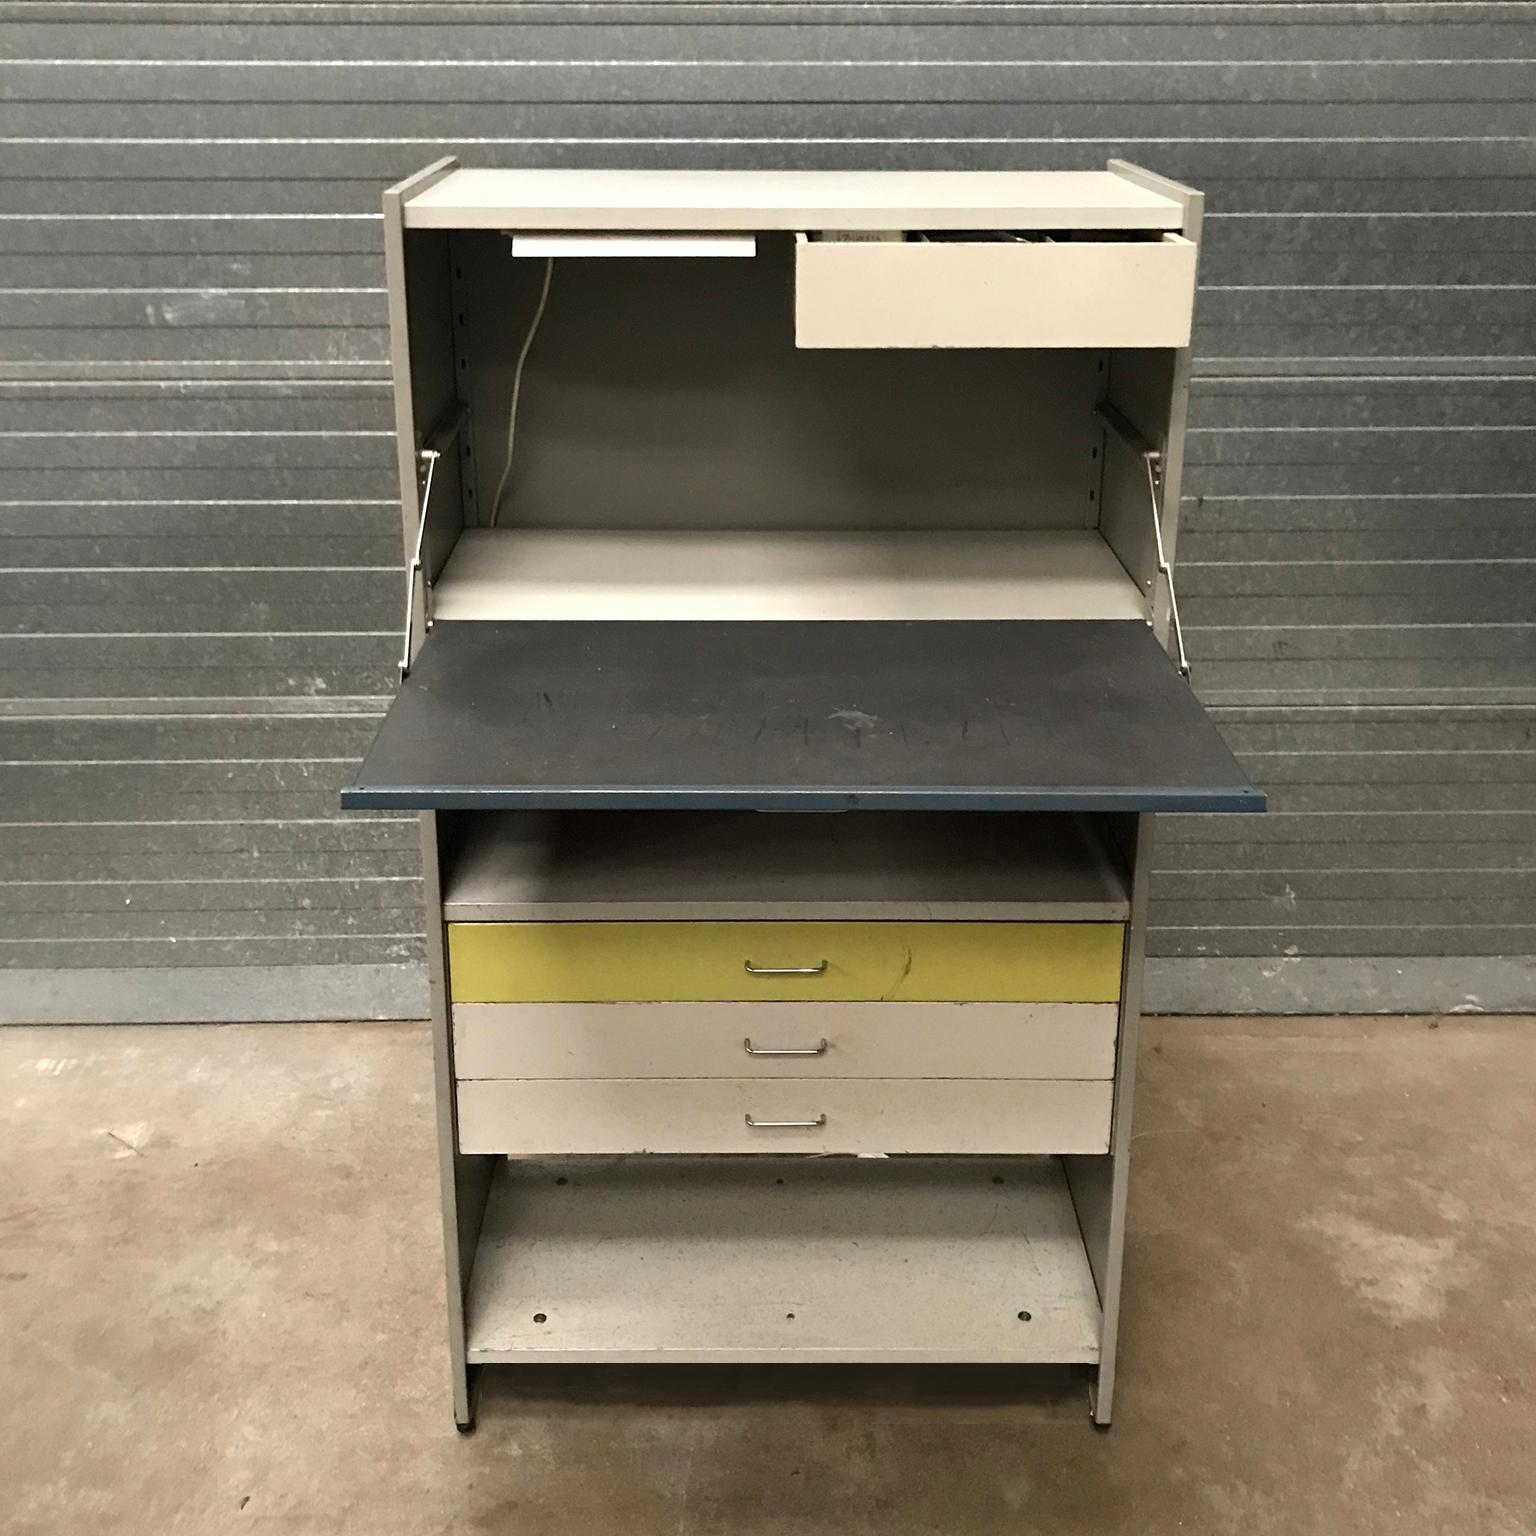 1959, Cordemeyer, Gispen, Desk Storage Cabinet 5600 with Folding Desktop In Good Condition For Sale In Amsterdam IJMuiden, NL